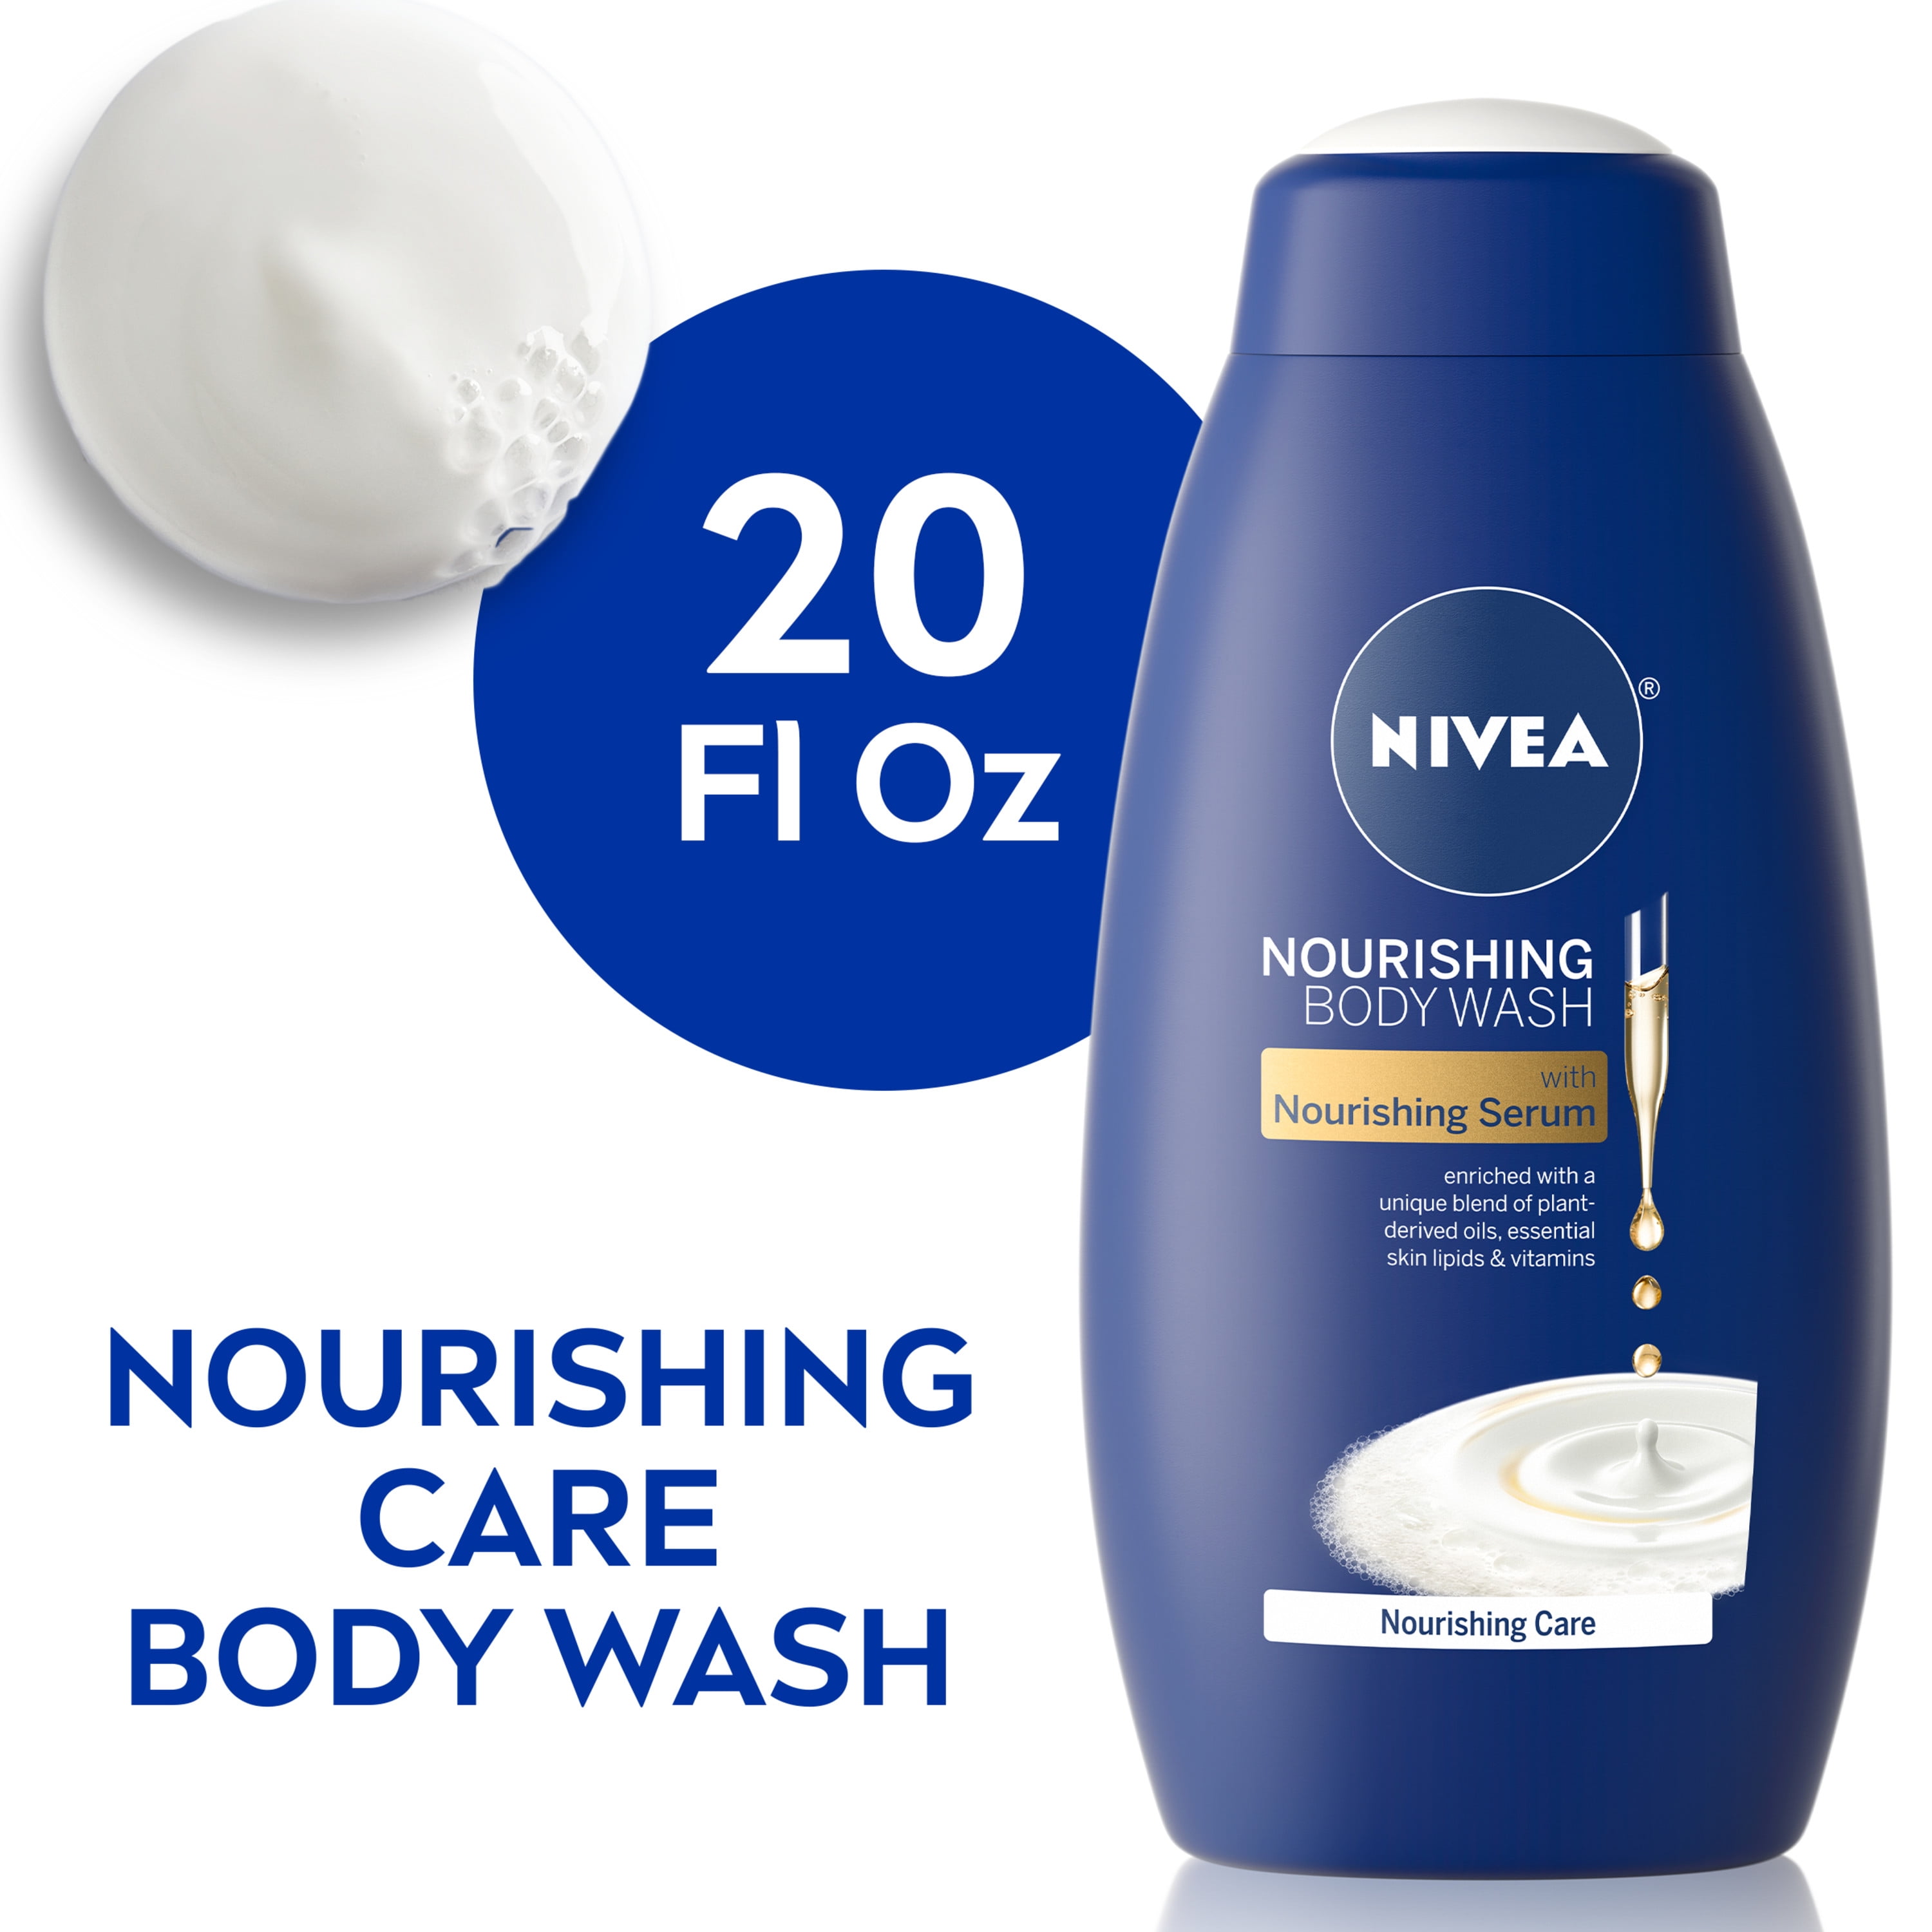 fornærme Arne skrue NIVEA Nourishing Care Body Wash with Nourishing Serum, 20 Fl Oz -  Walmart.com